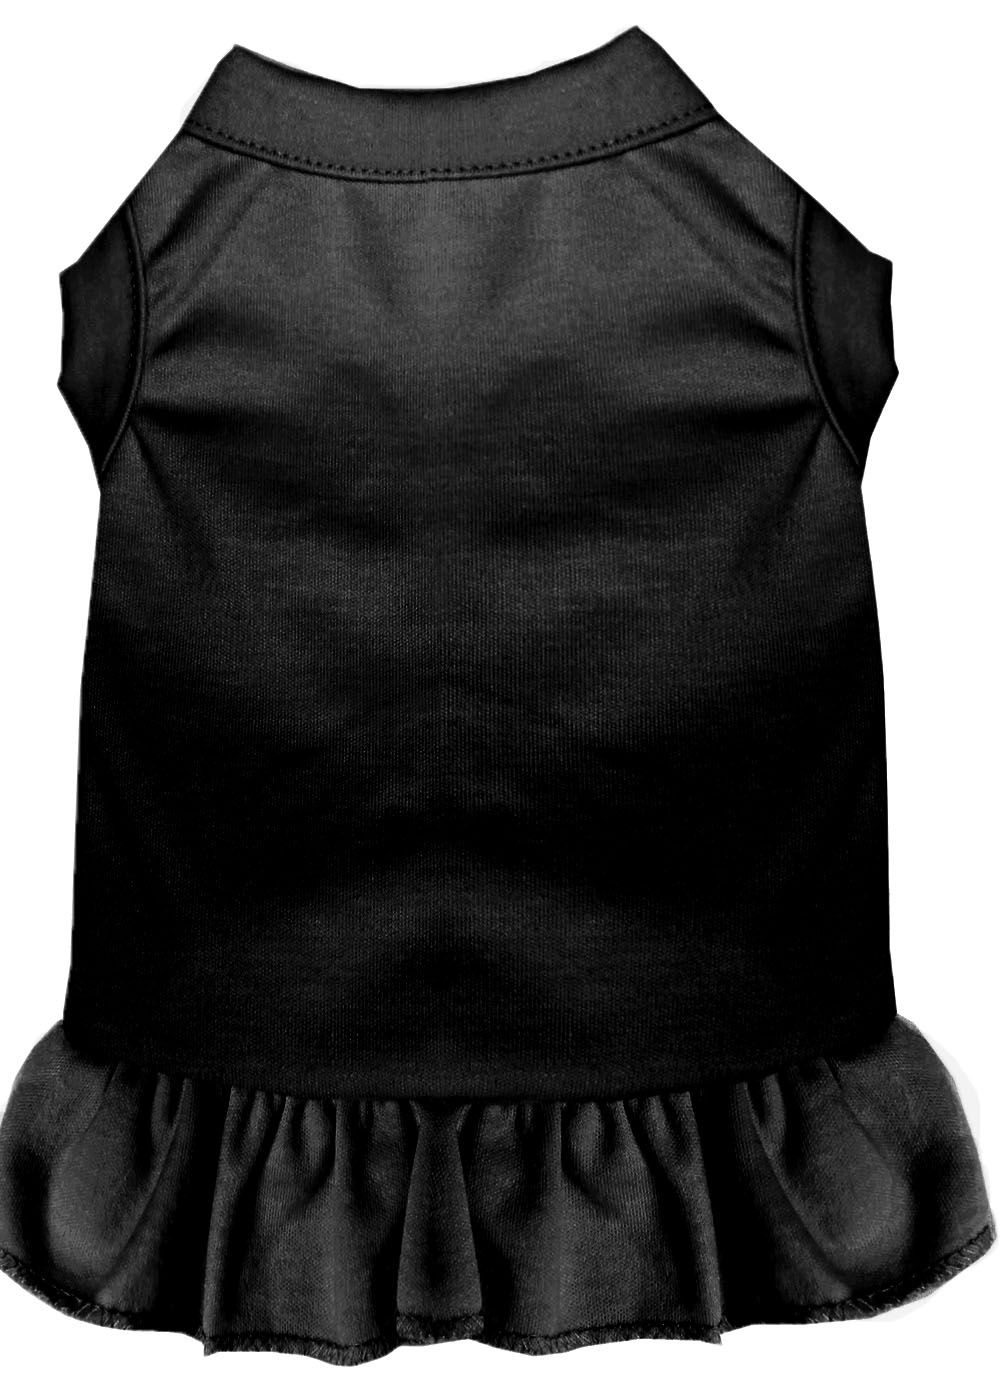 Plain Pet Dress Black XL